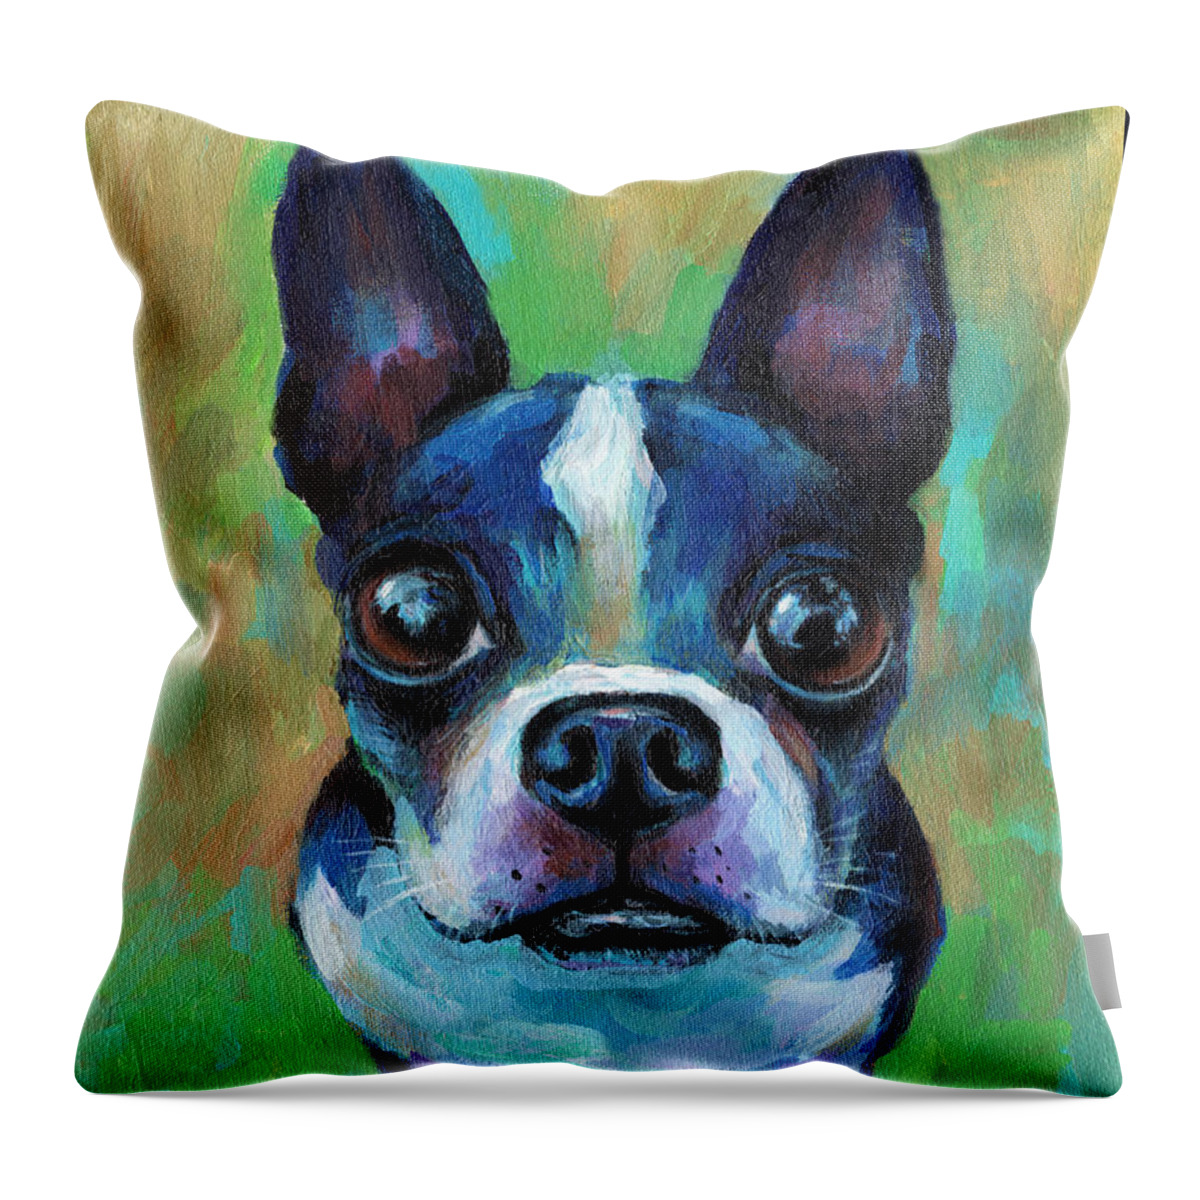 Boston Terrier Throw Pillow featuring the painting Adorable Boston Terrier Dog by Svetlana Novikova